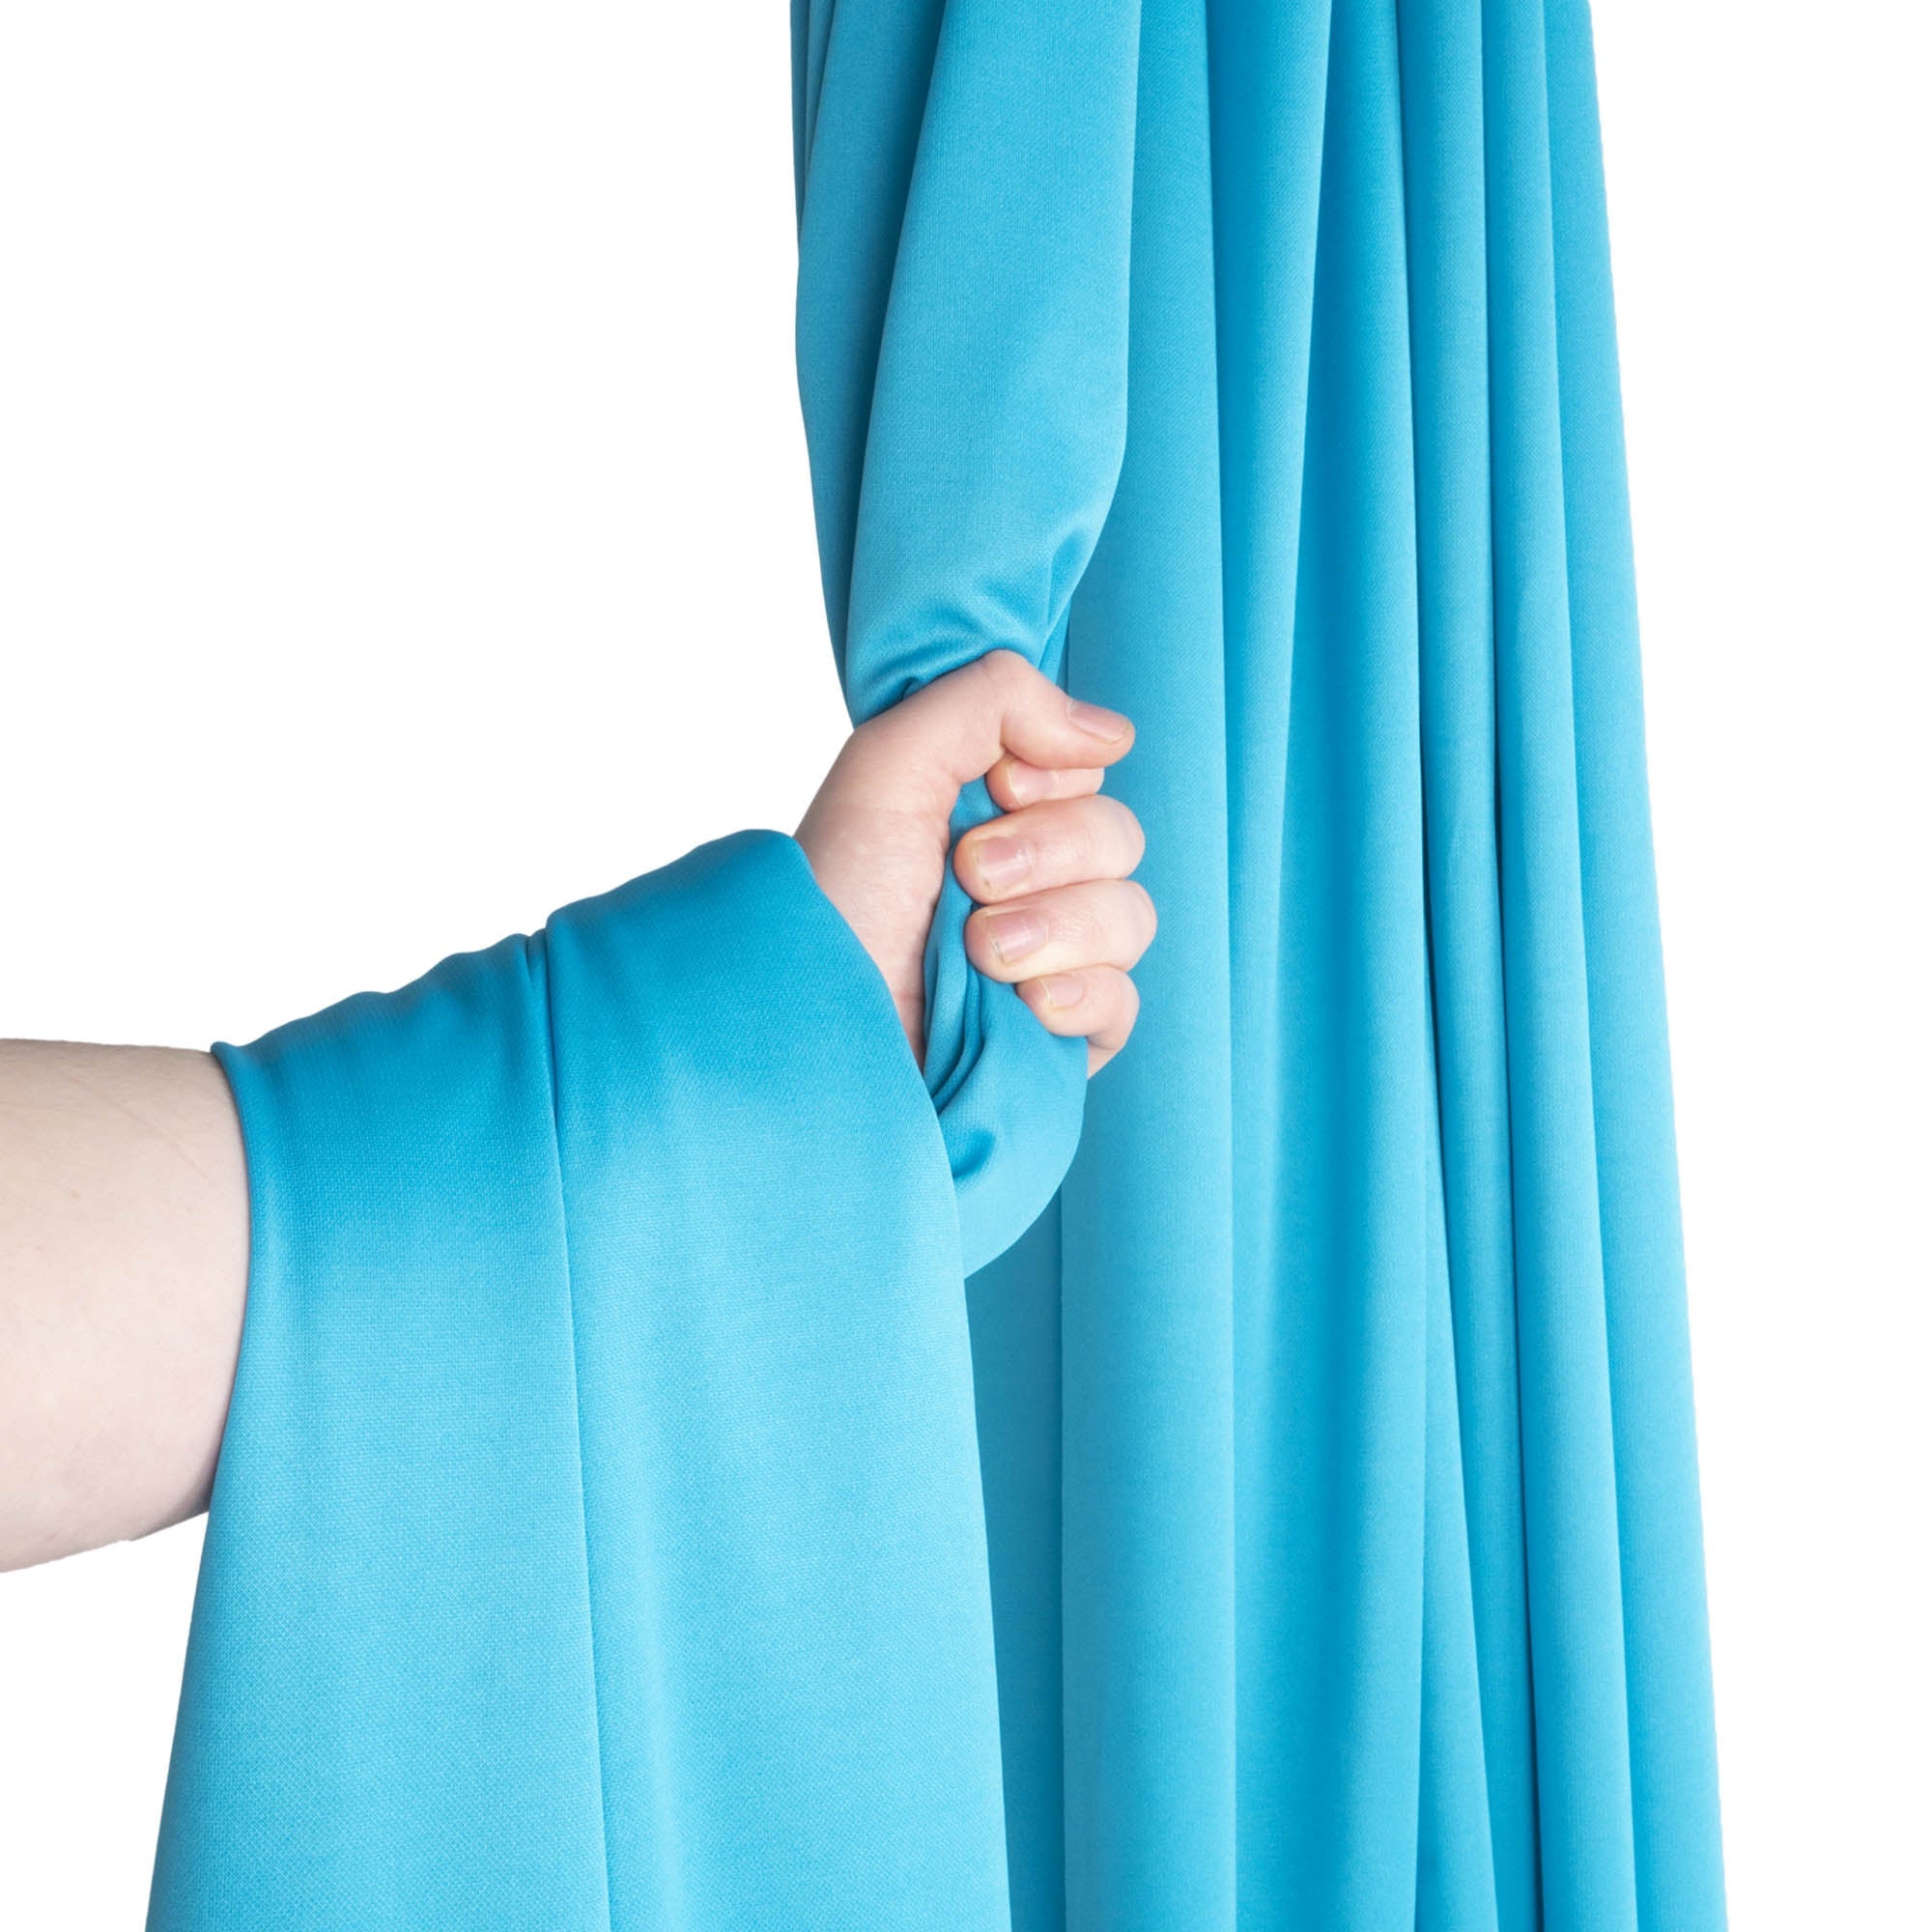 True turquoise silk wrapped around hand